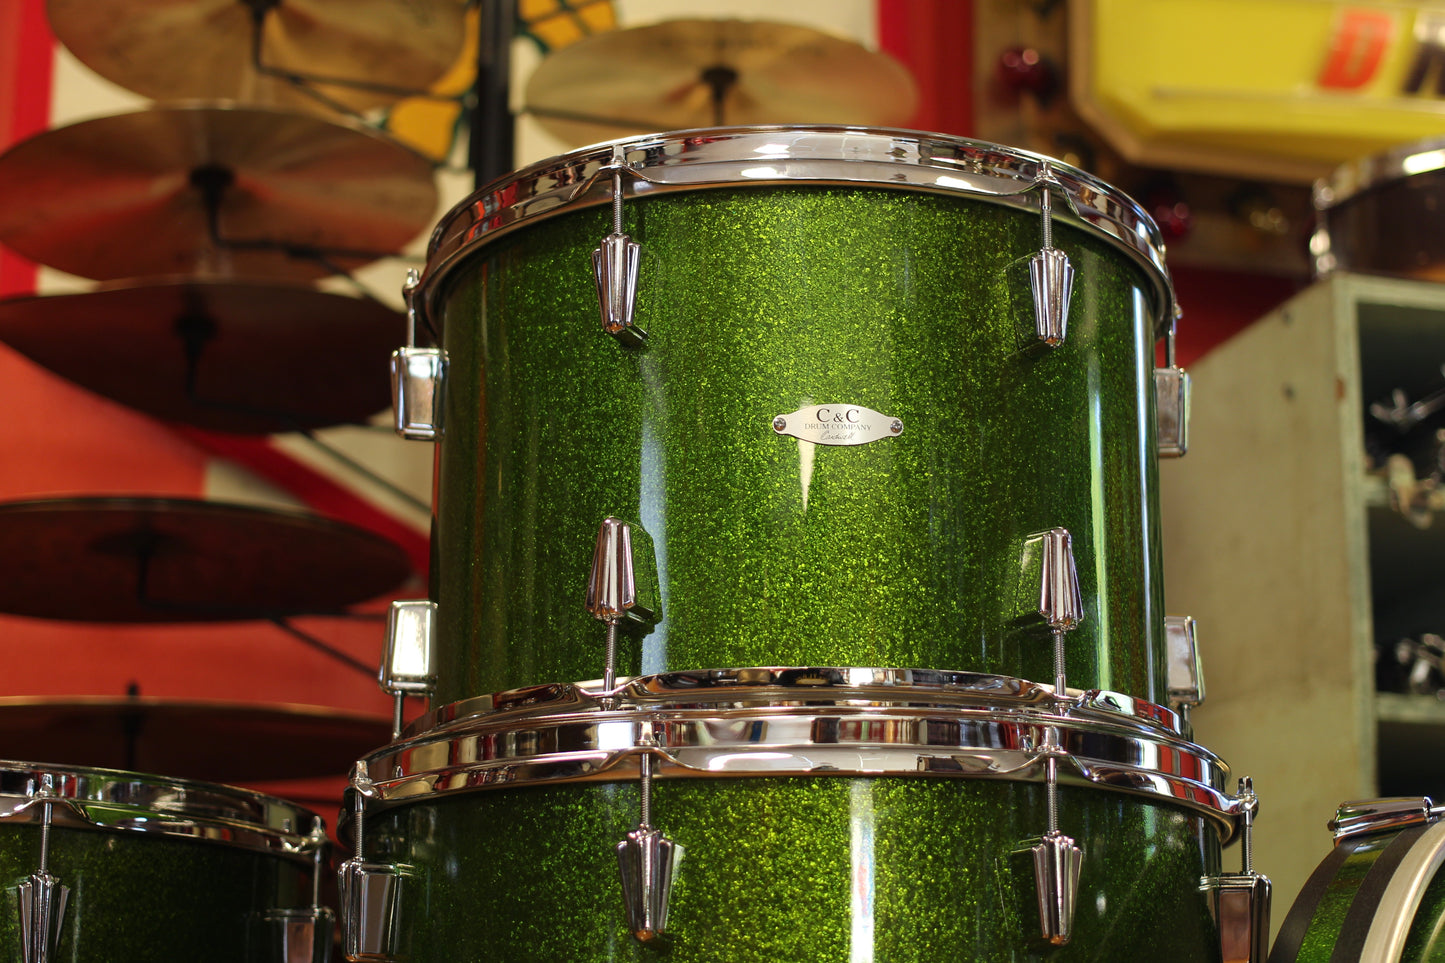 Used - C&C Drum Co. 12th & Vine in Kermit Green Sparkle 12x26 16x18 16x16 10x14